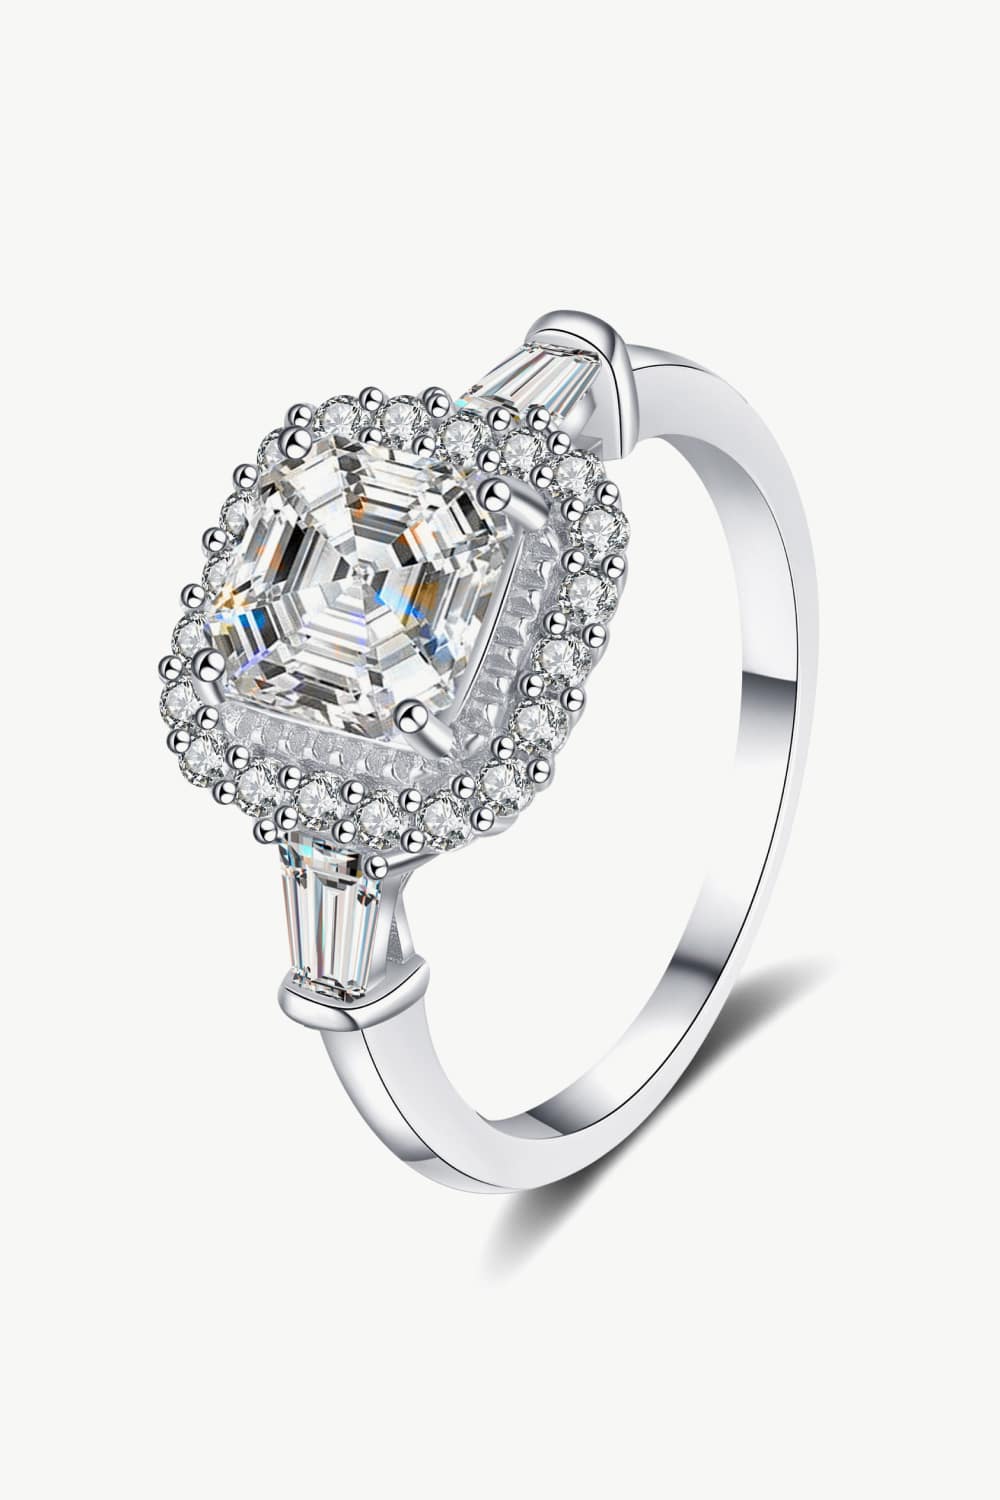 So Much Shine 2 Carat Moissanite Sterling Silver Ring - DromedarShop.com Online Boutique